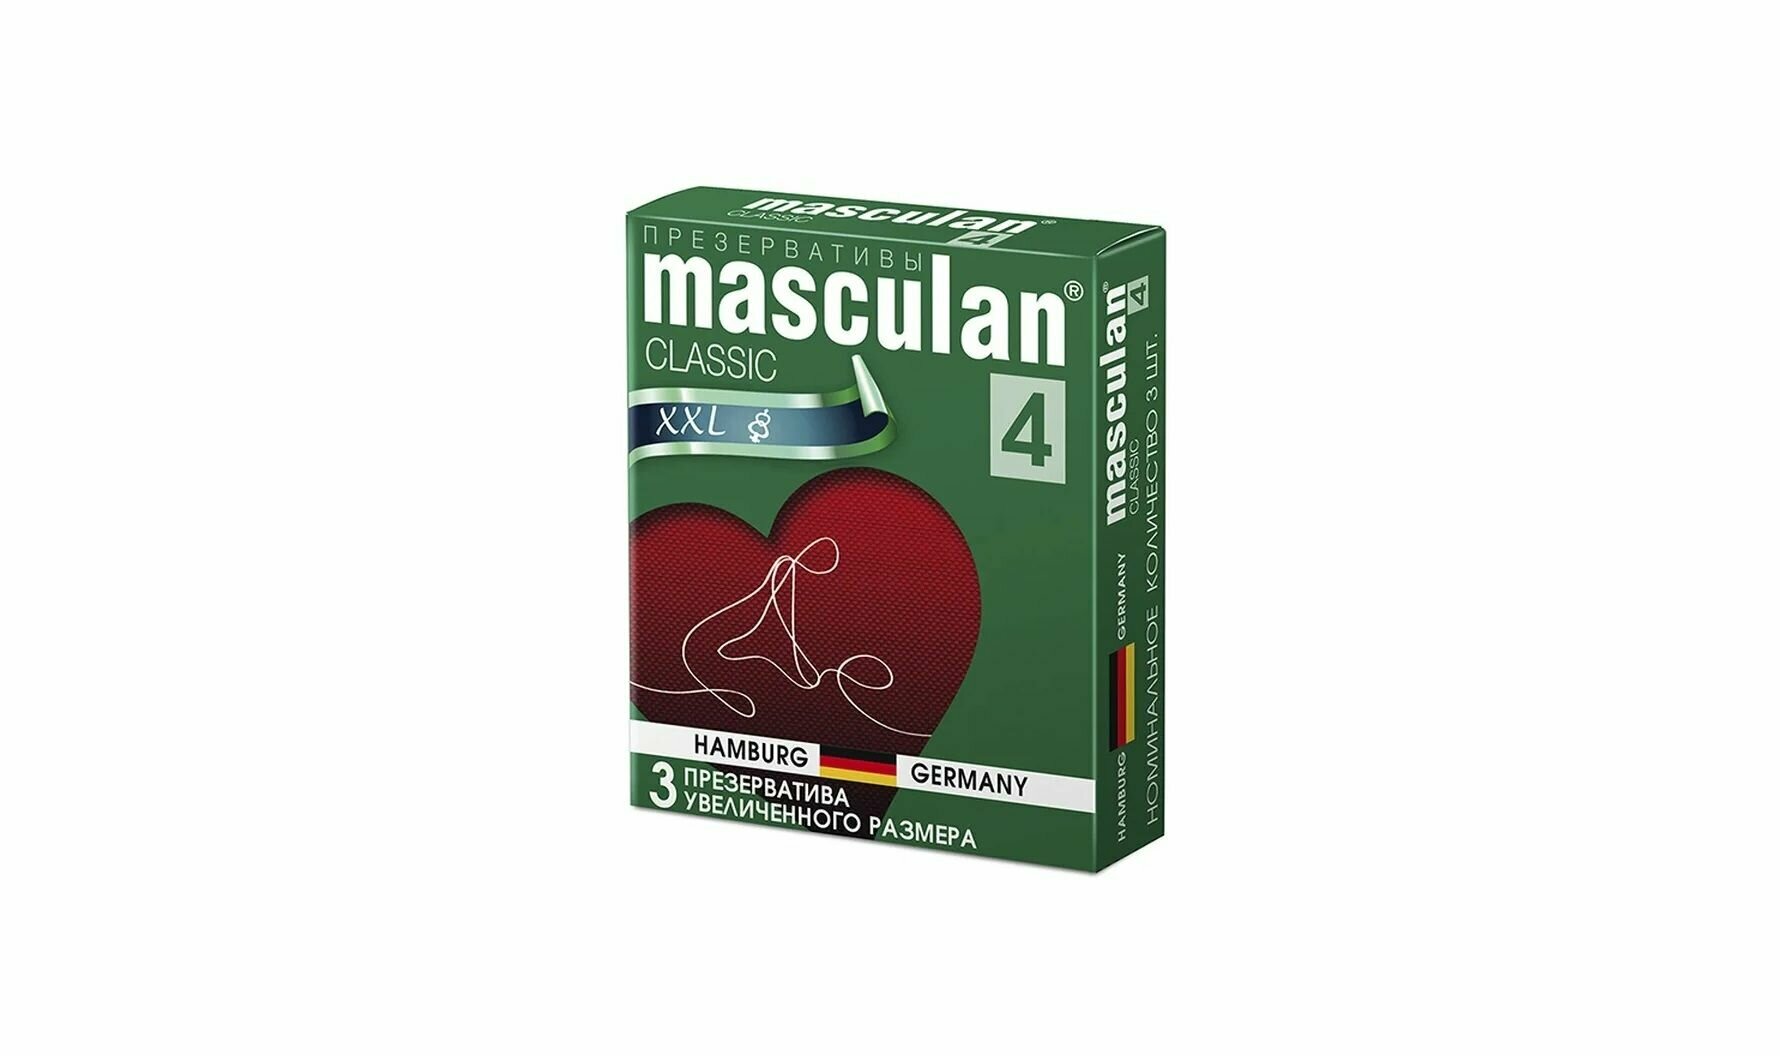 Masculan Презервативы 4 classic №3, увеличенного размера, розовые